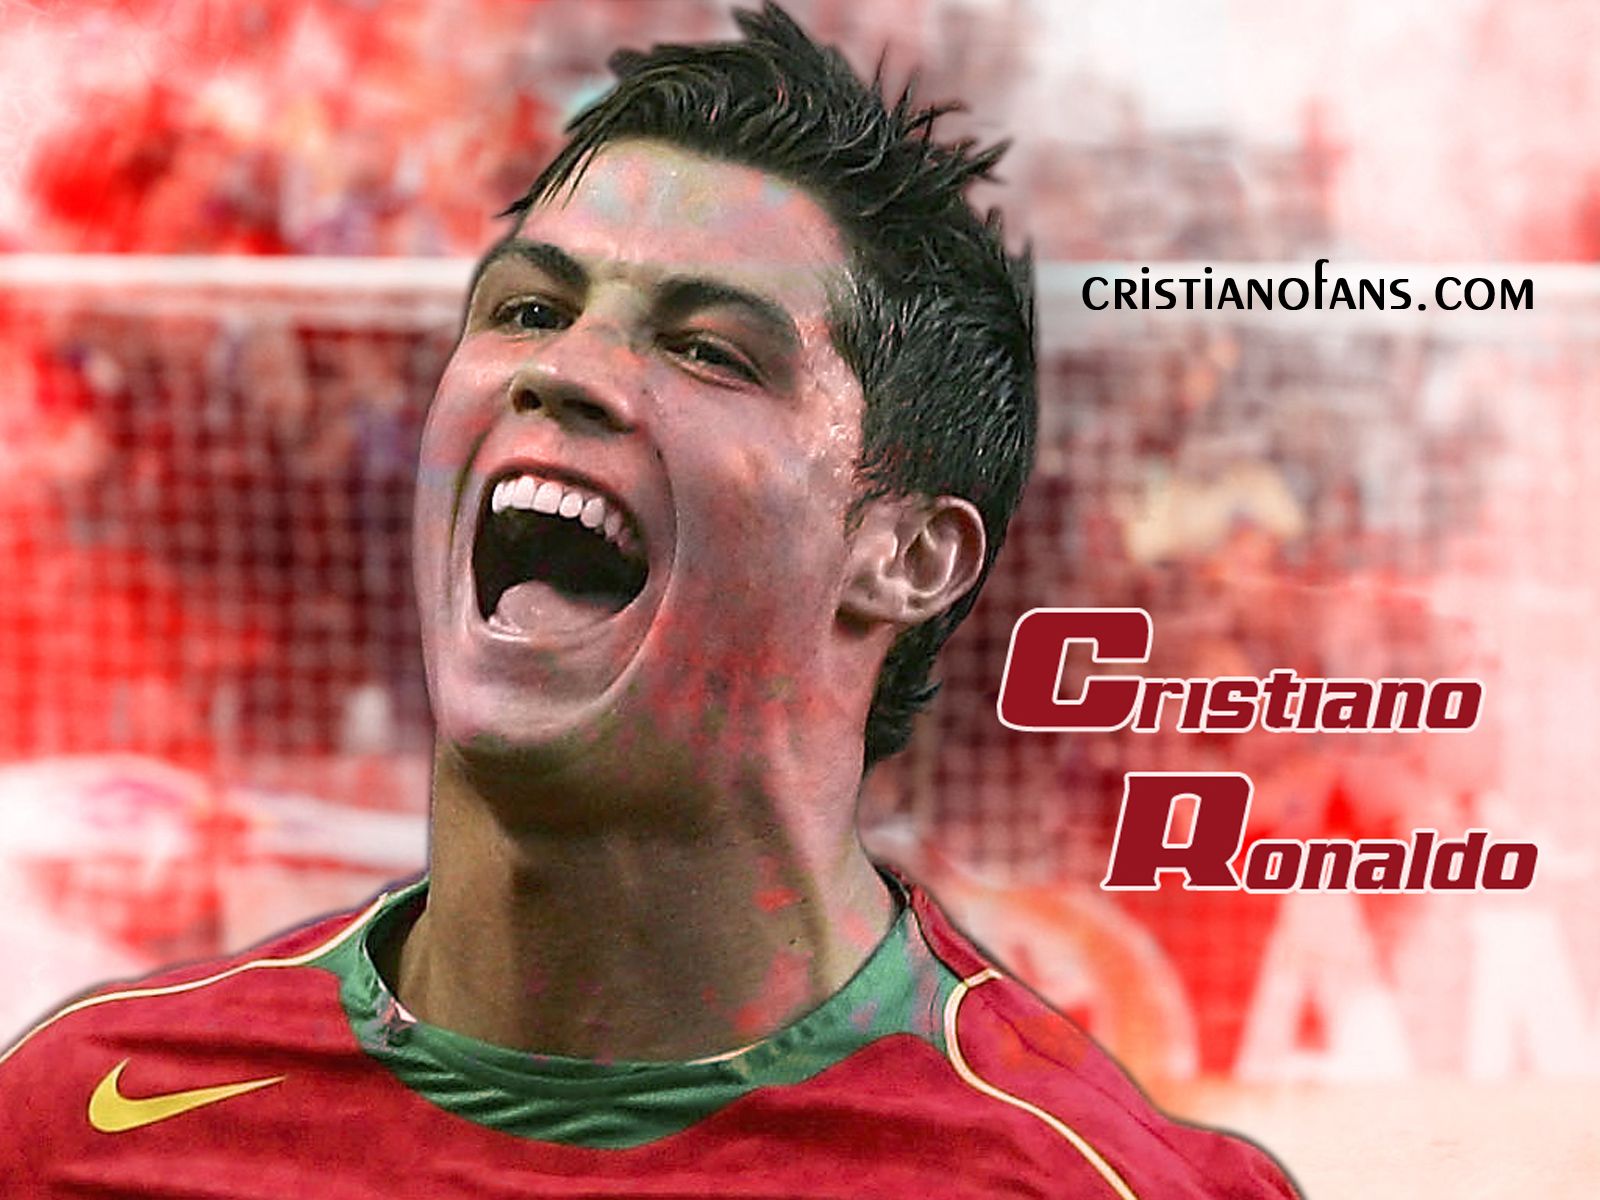 trololo blogg: Wallpaper C Ronaldo Download